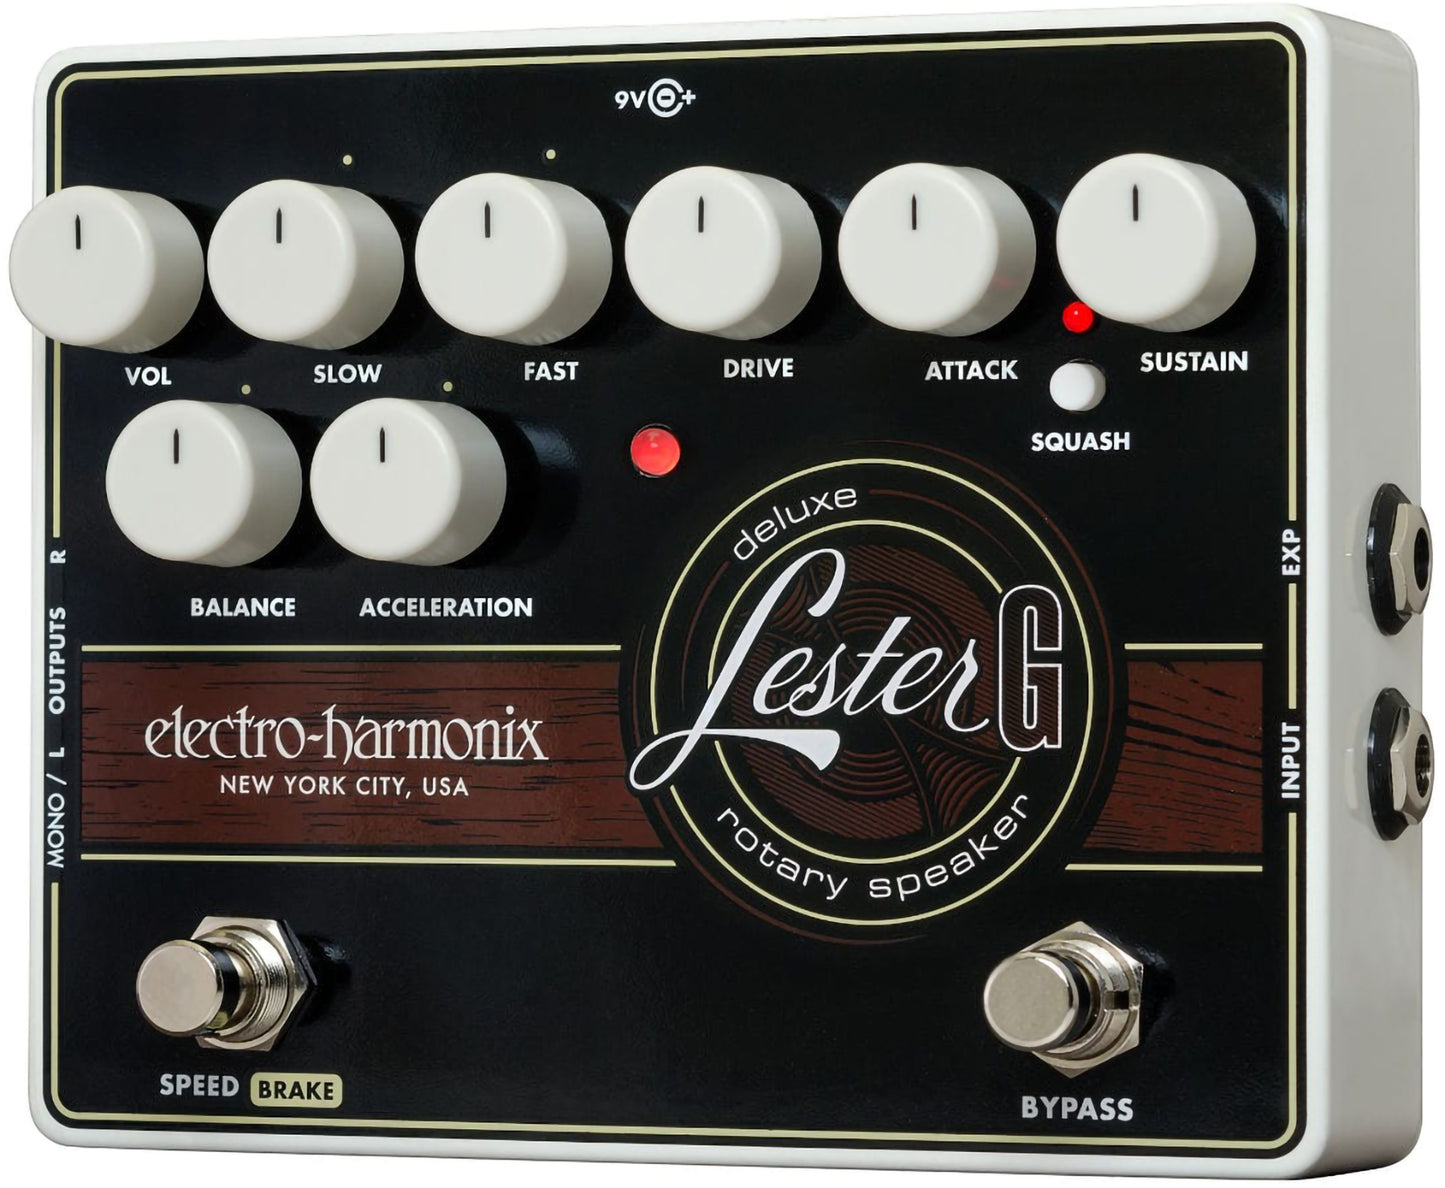 Electro Harmonix Lester G Deluxe Rotary Speaker Pedal